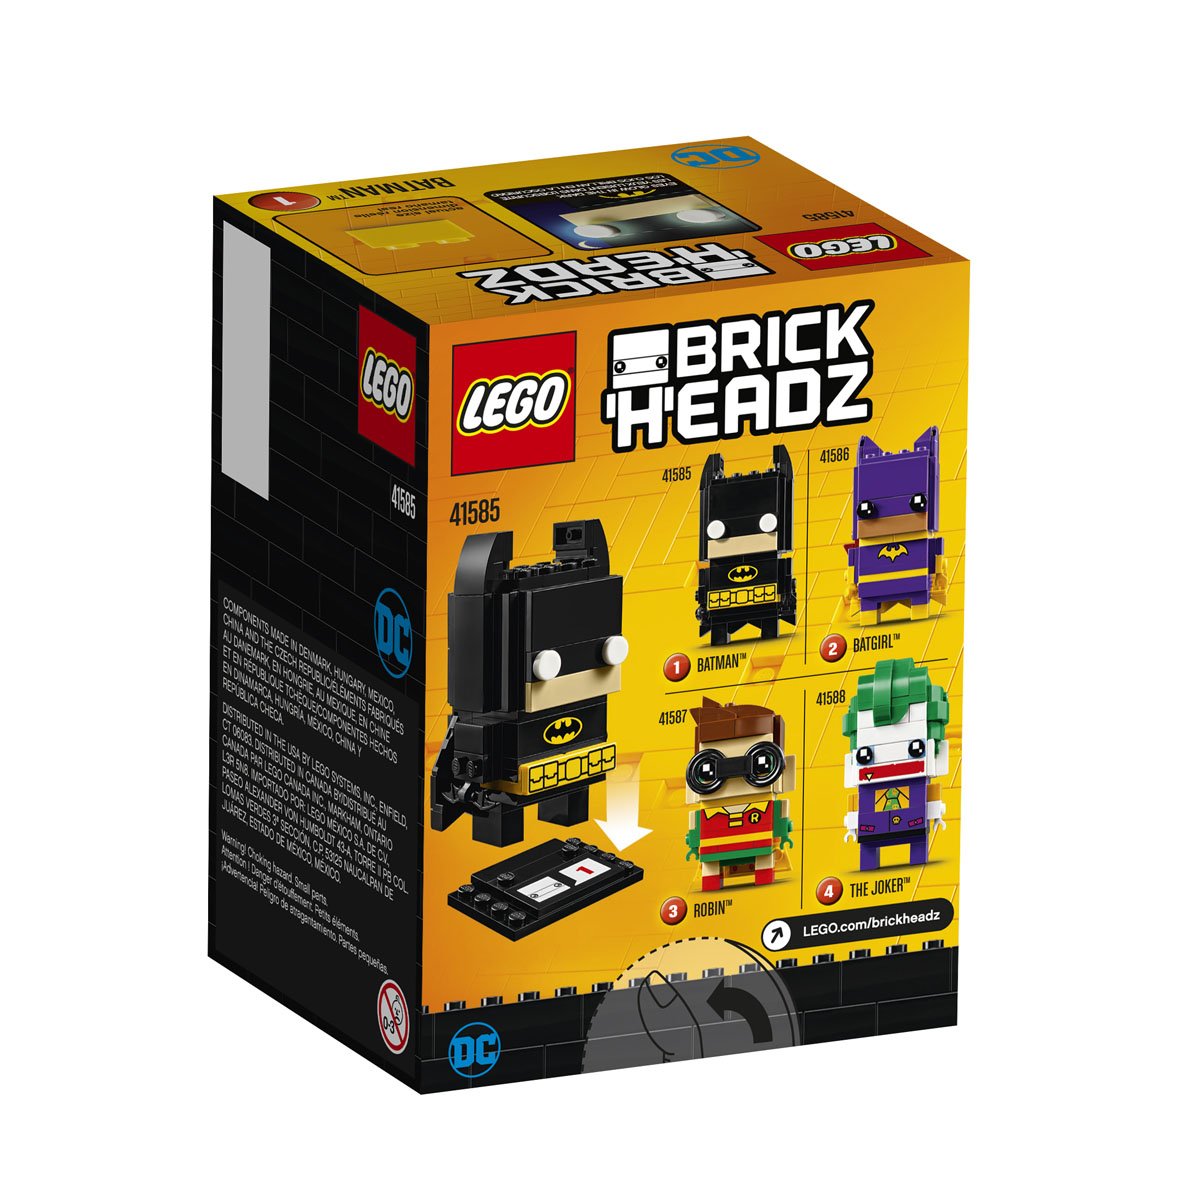 Brickheadz Batman Lego